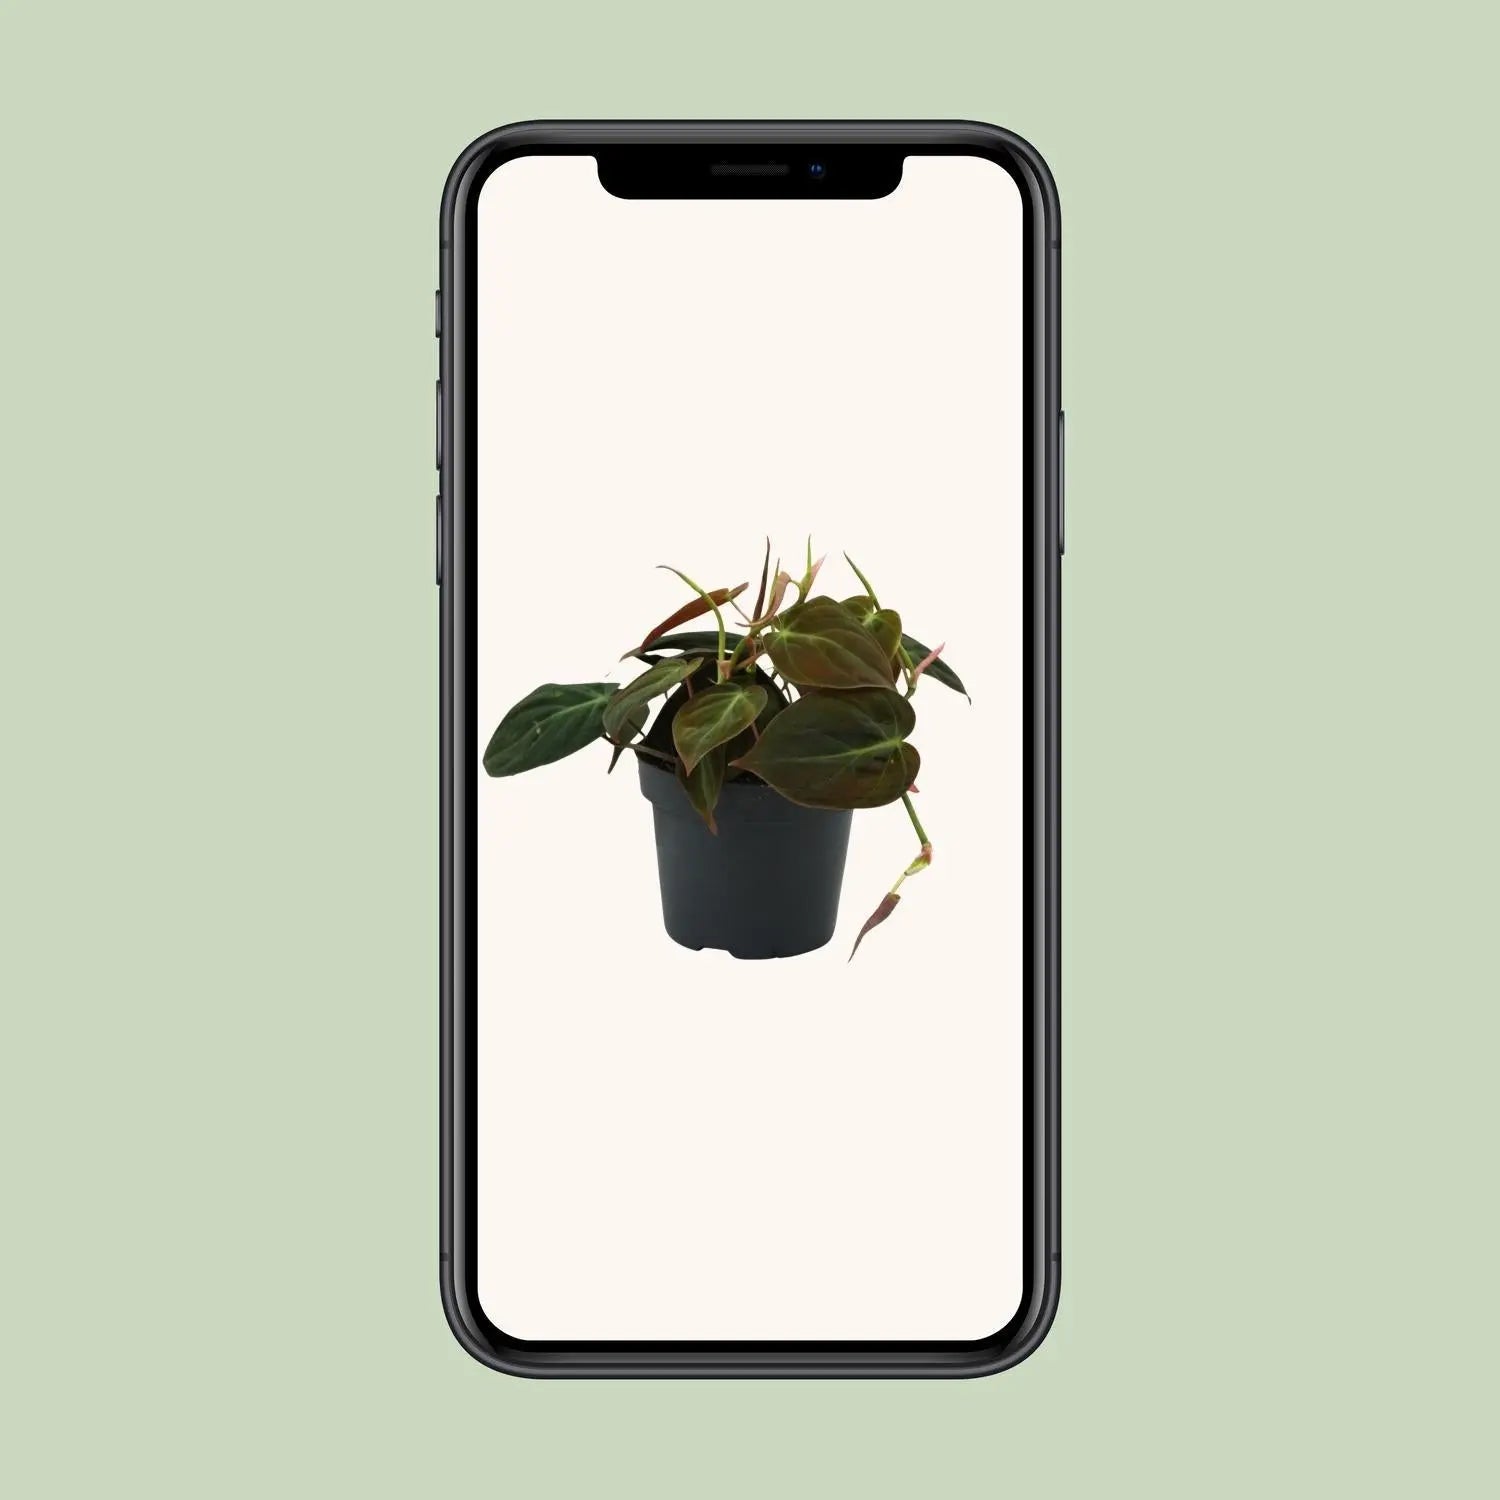 Philodendron Micans - Ø12cm - ↕15cm Everspring